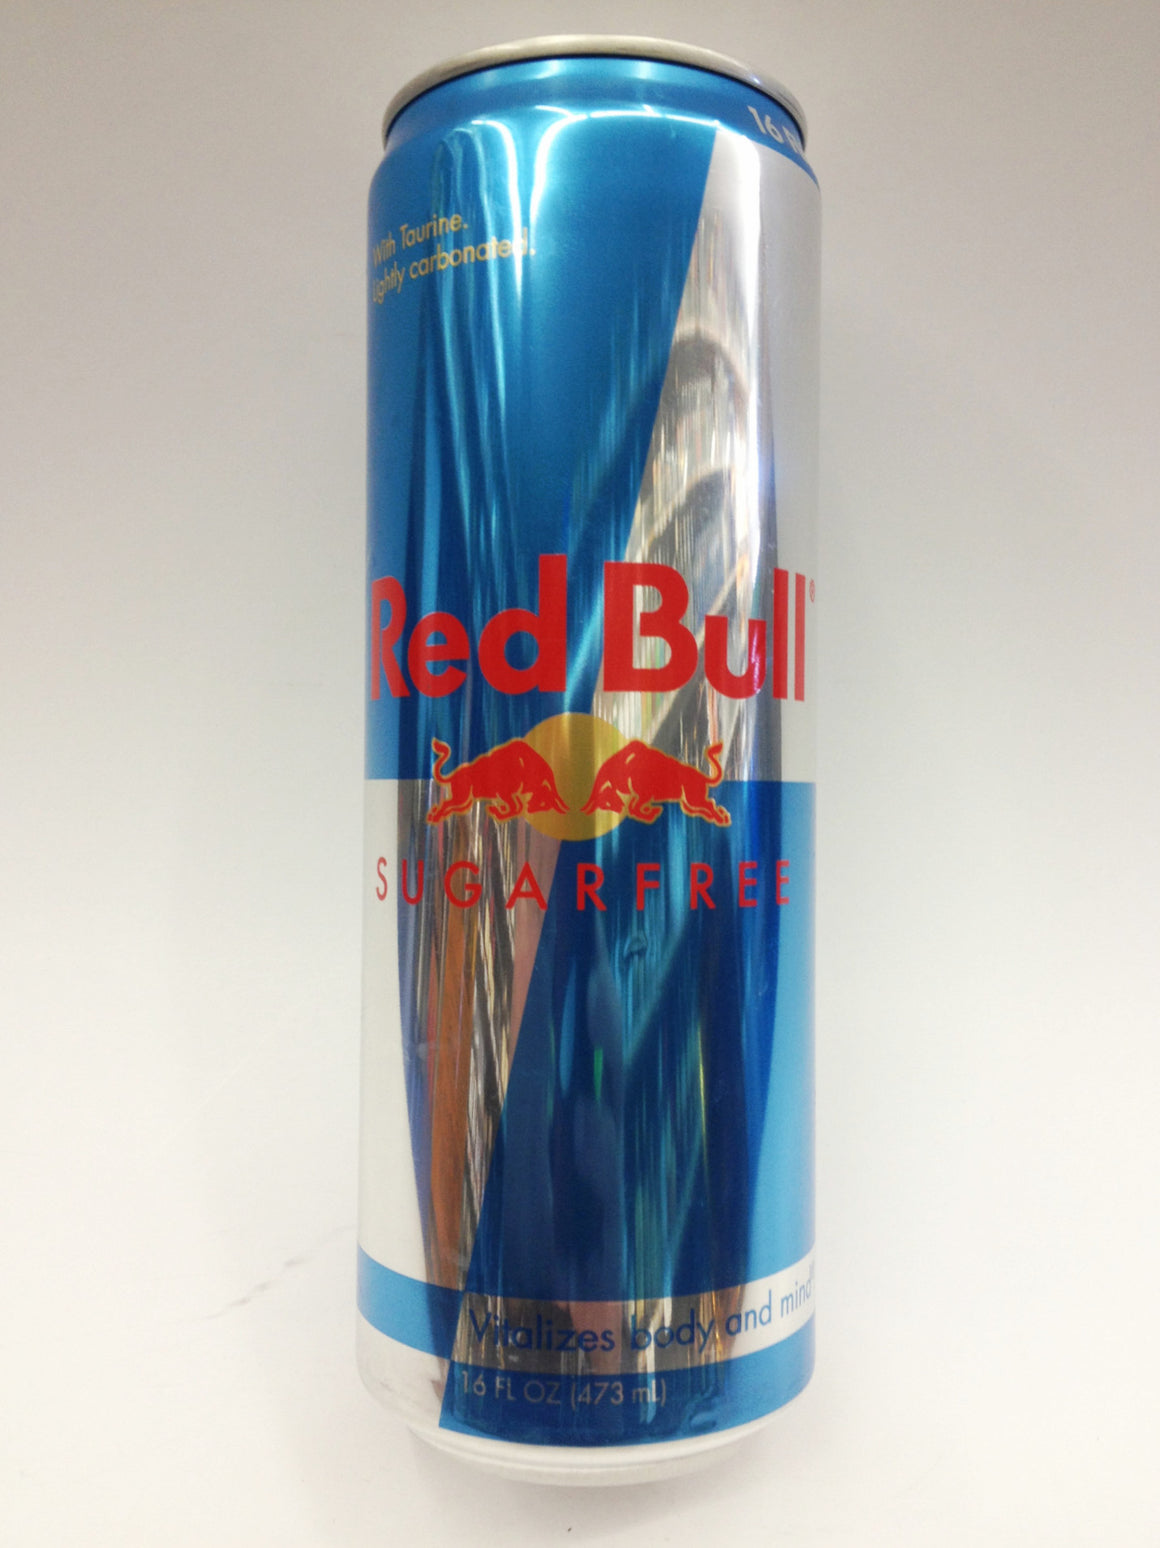 Red Bull Sugarfree Energy Drink 16oz